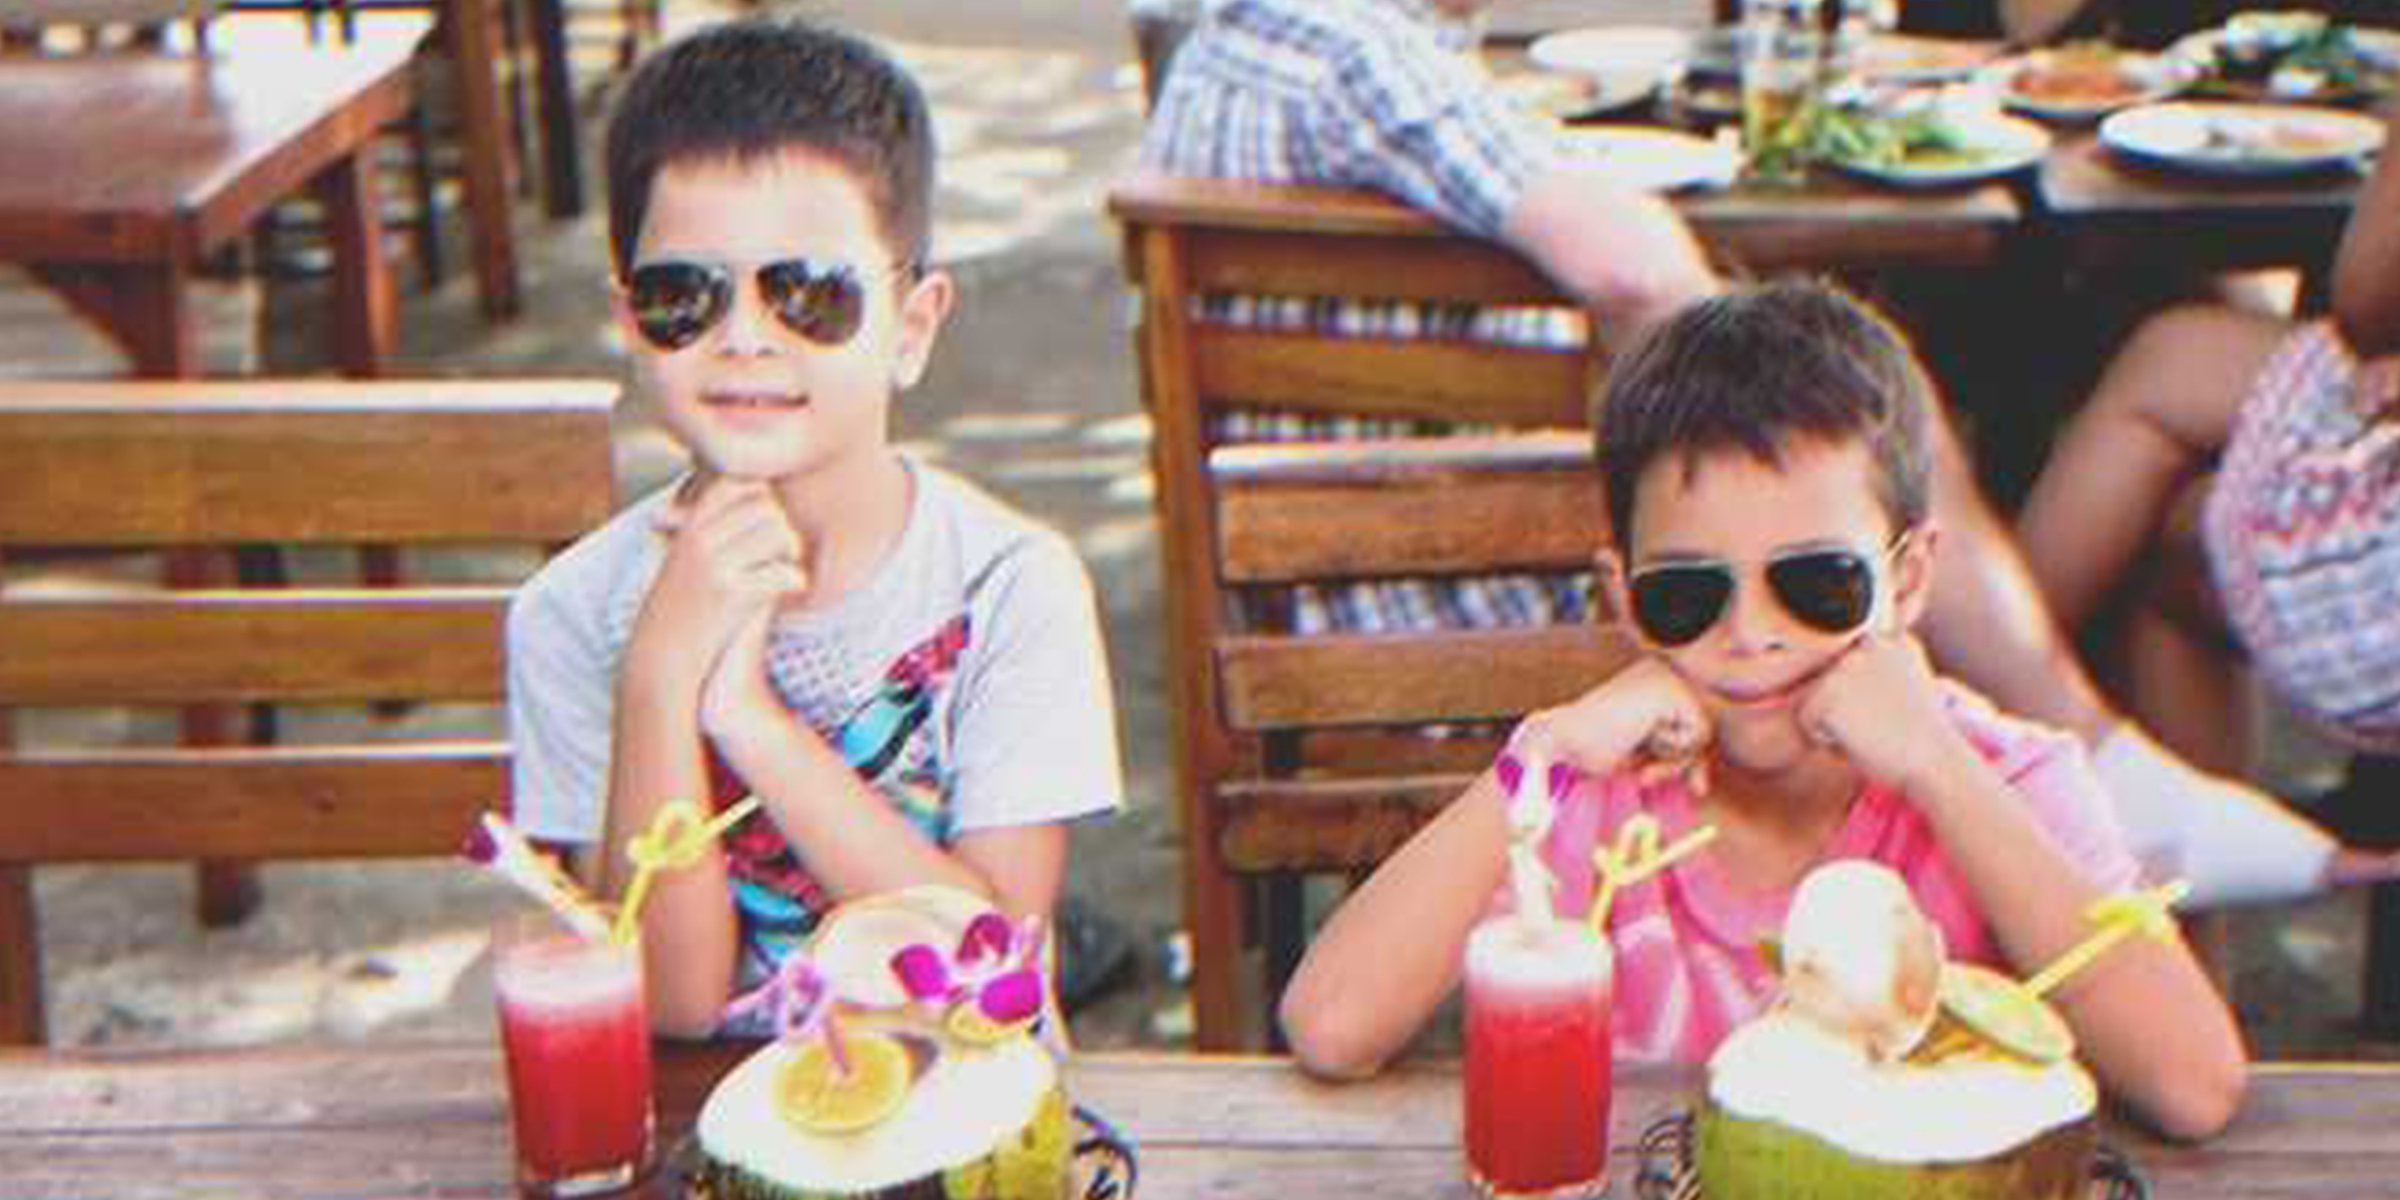 Dos niños en un restaurante | Flickr/Phuket@photograper.net (CC BY 2.0)